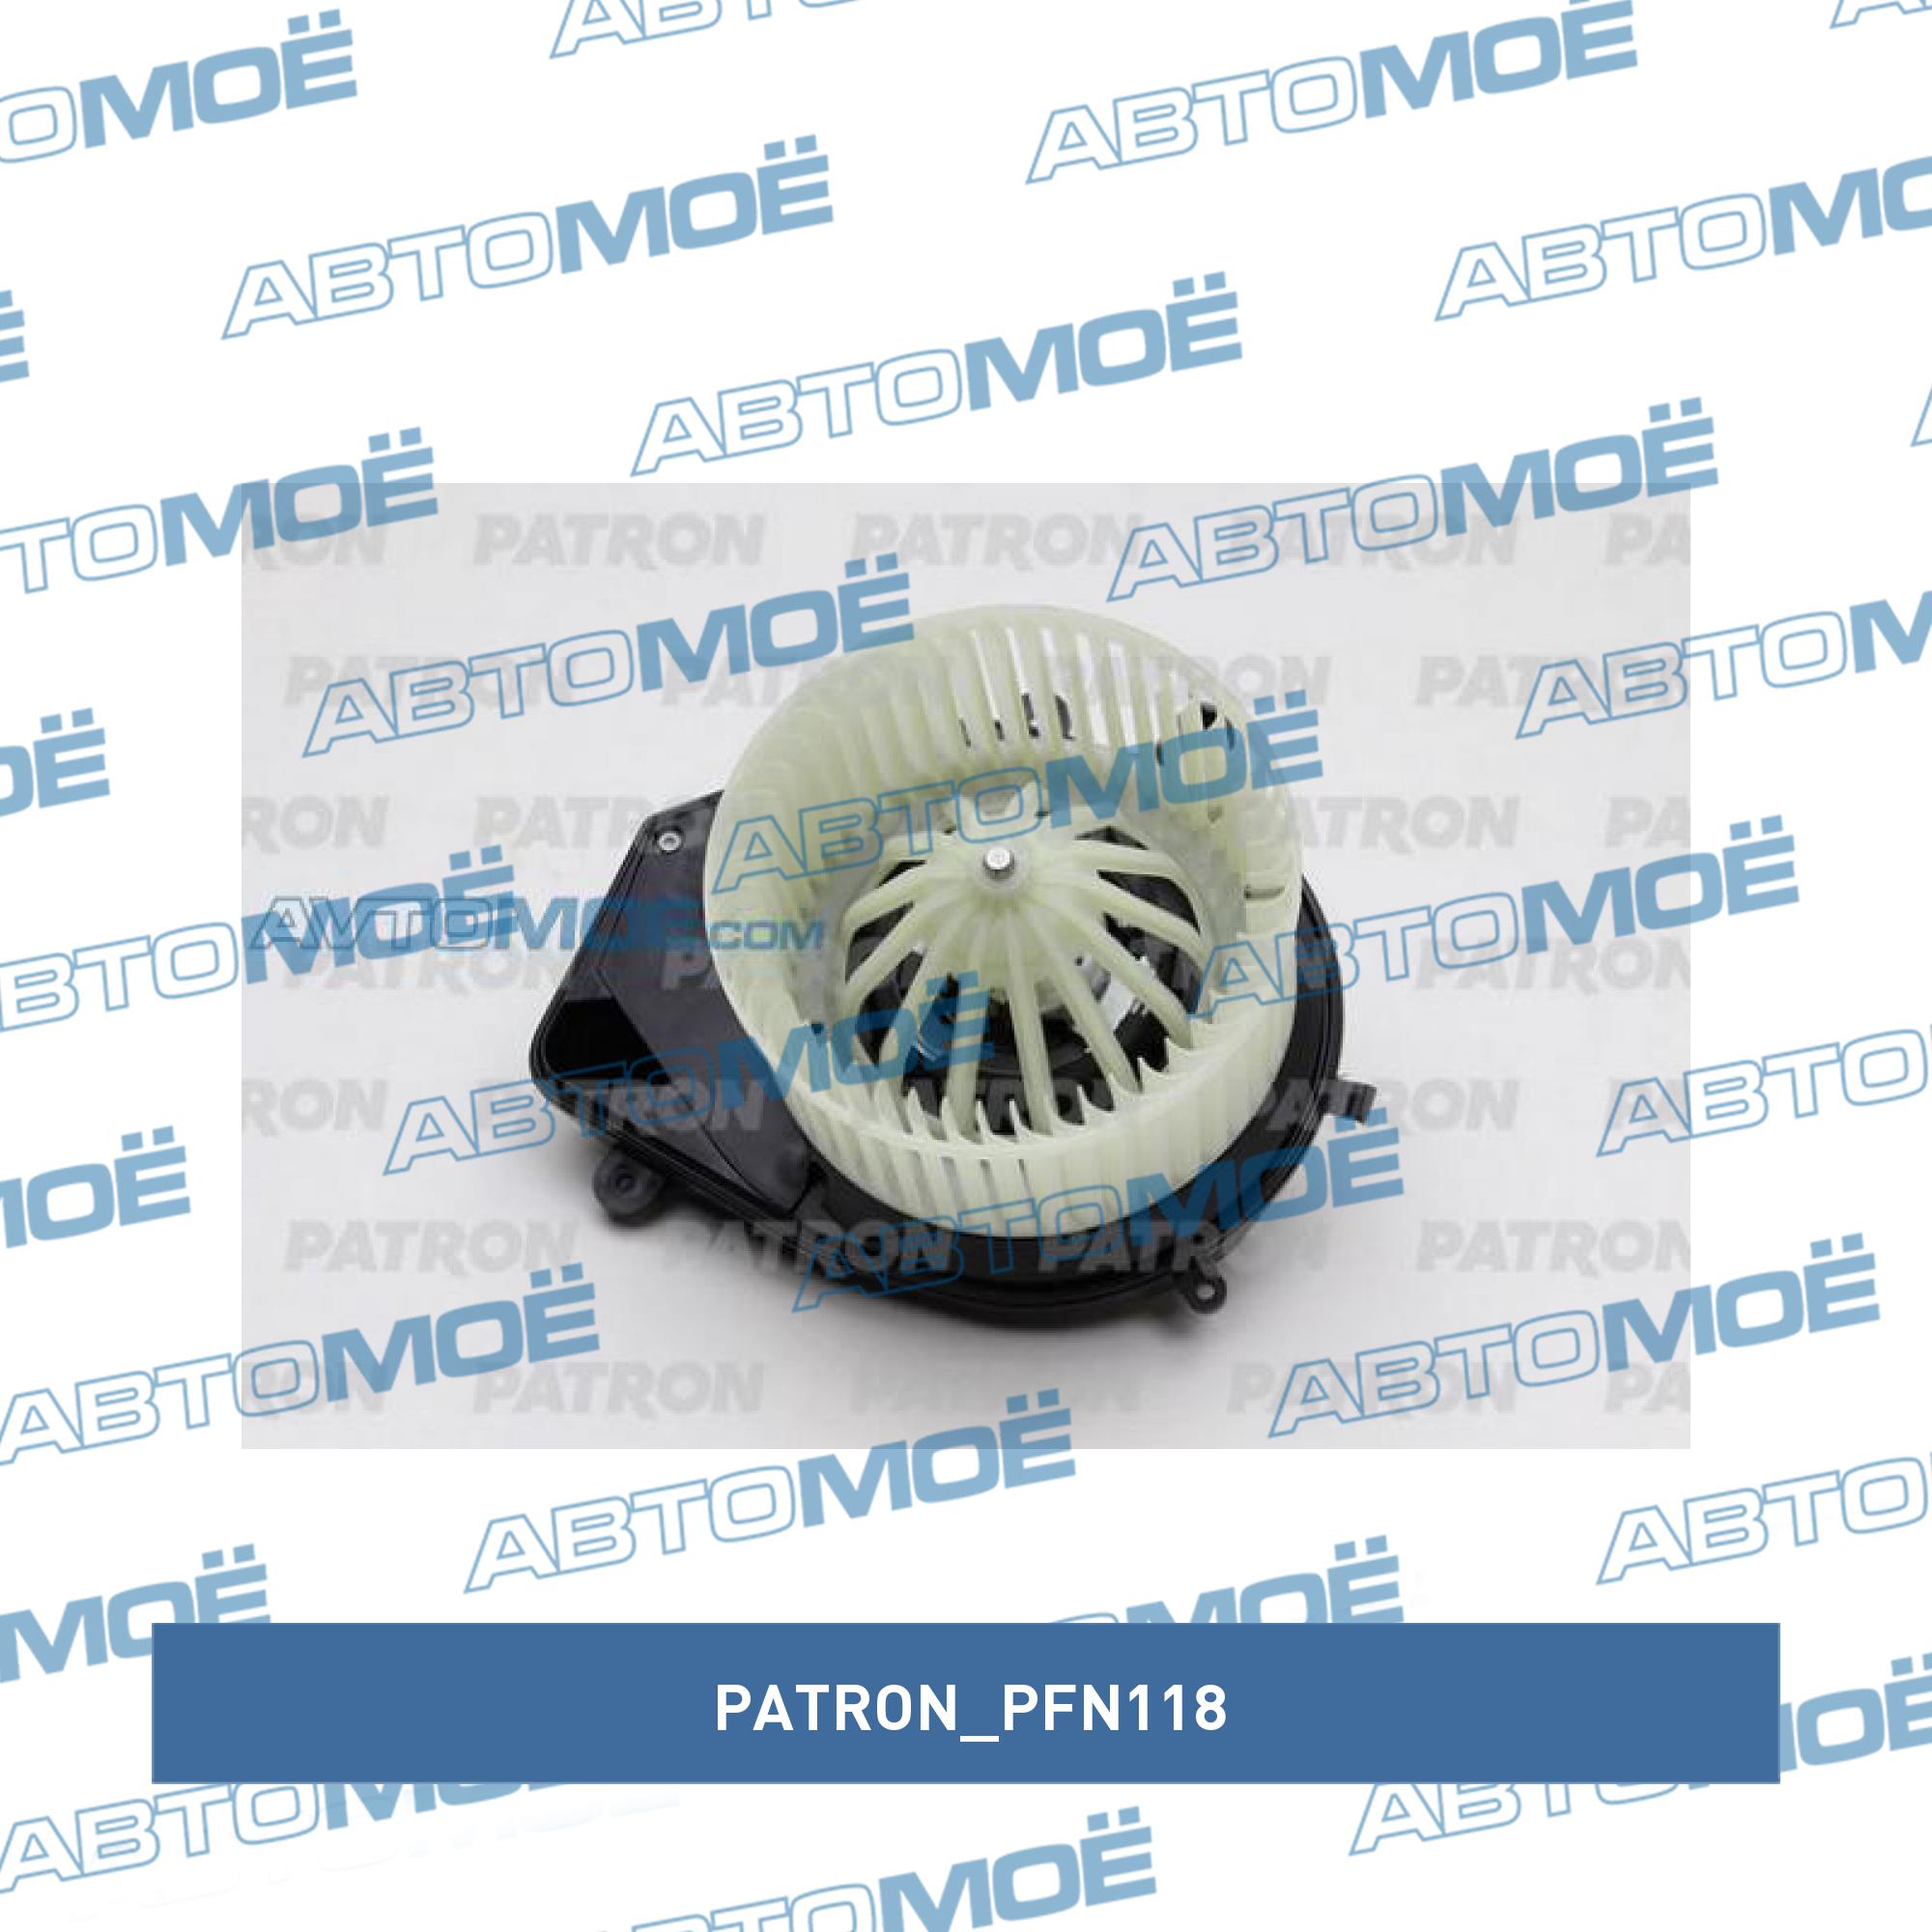 Мотор отопителя PFN118 PATRON для MINI COOPER купить в Омске, цена от 3415  руб в АВТОМОЁ